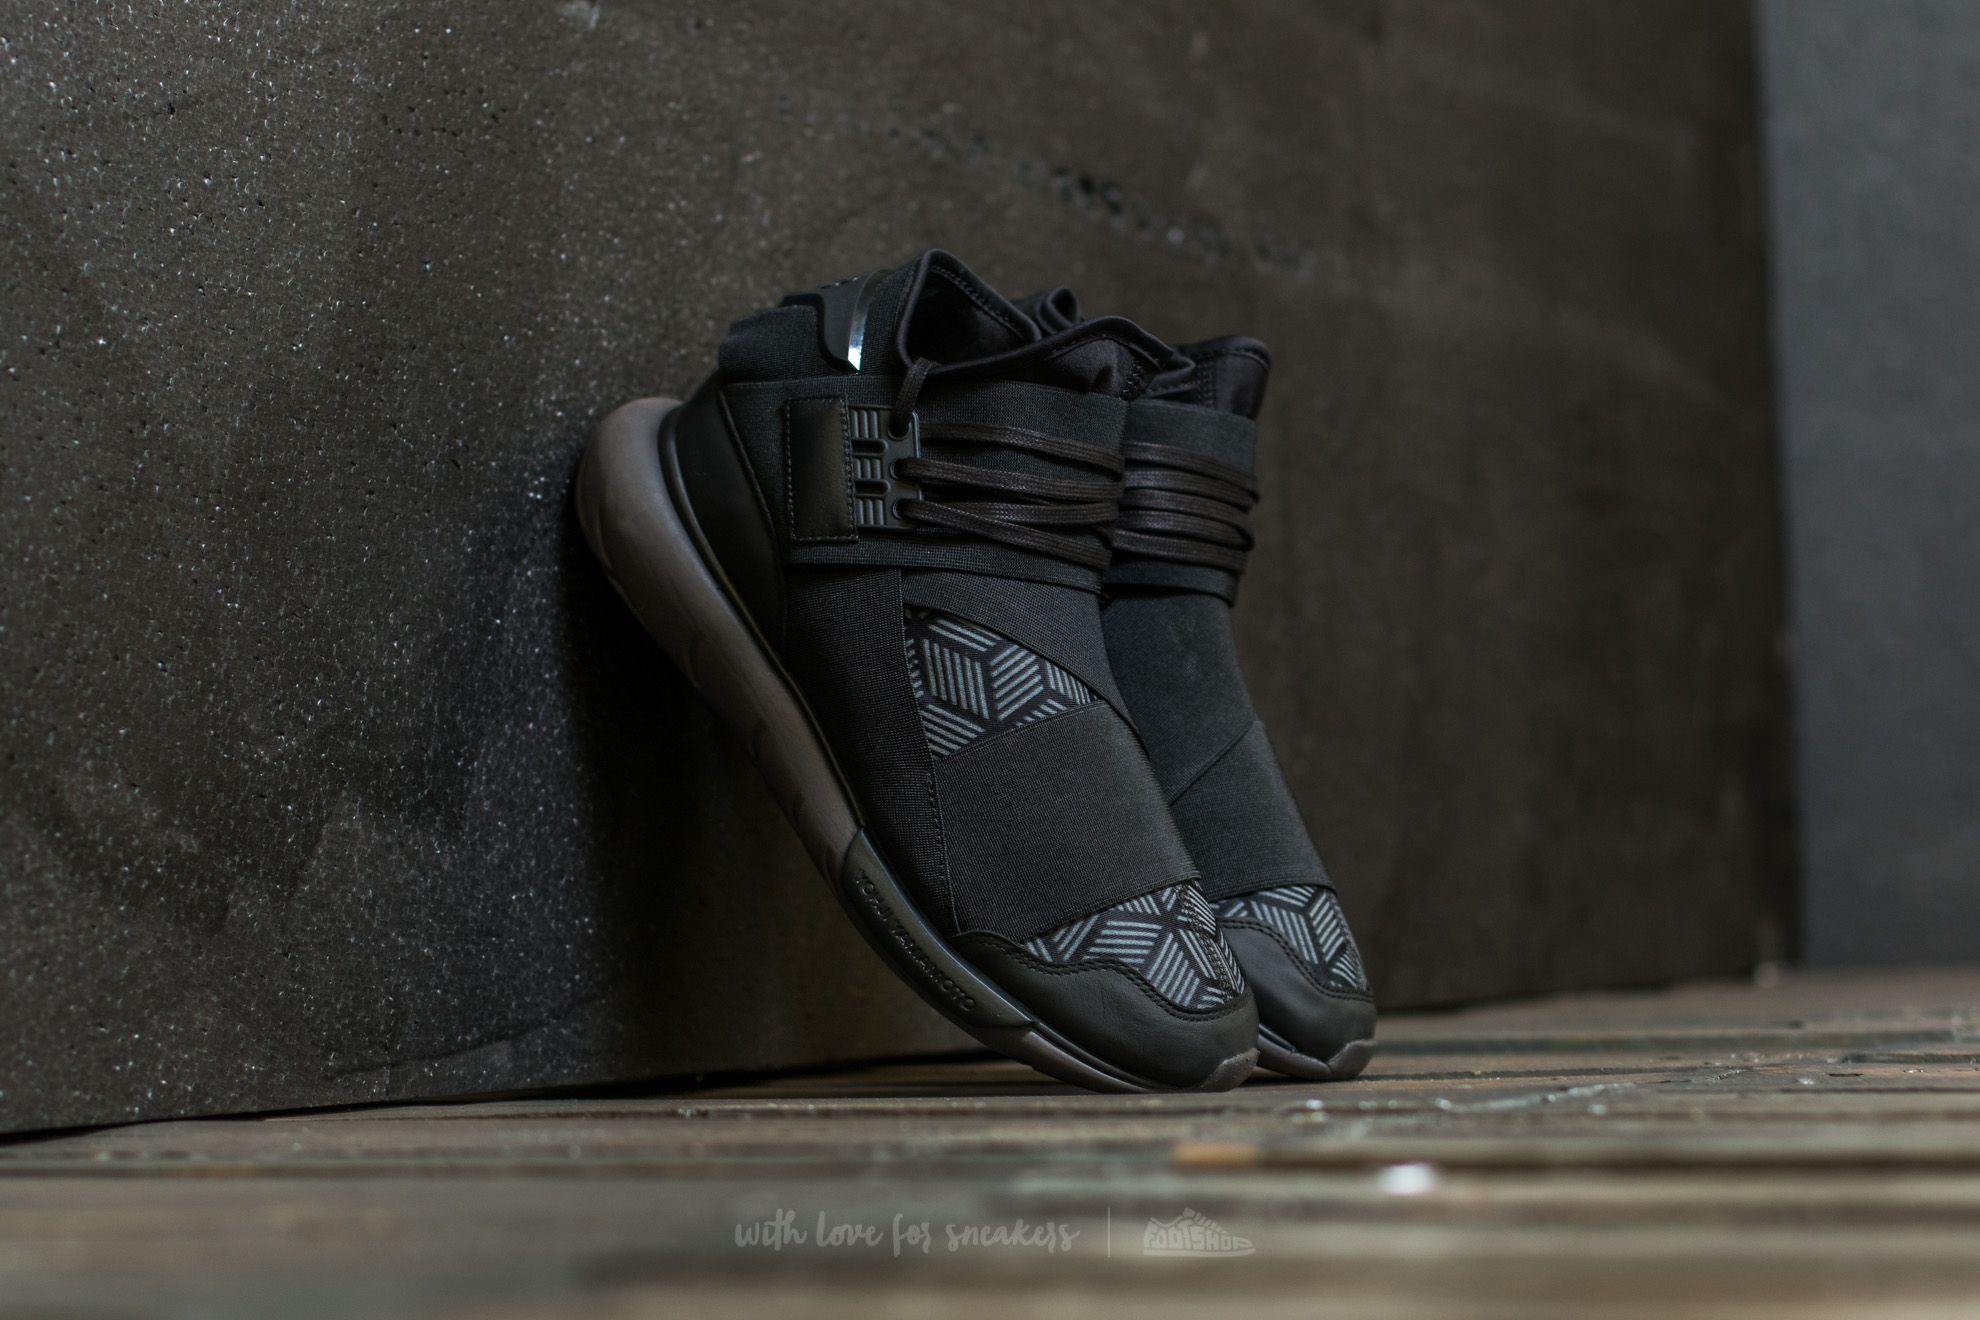 Men's shoes Y-3 Qasa High Core Black/ Utility Black/ Core Black